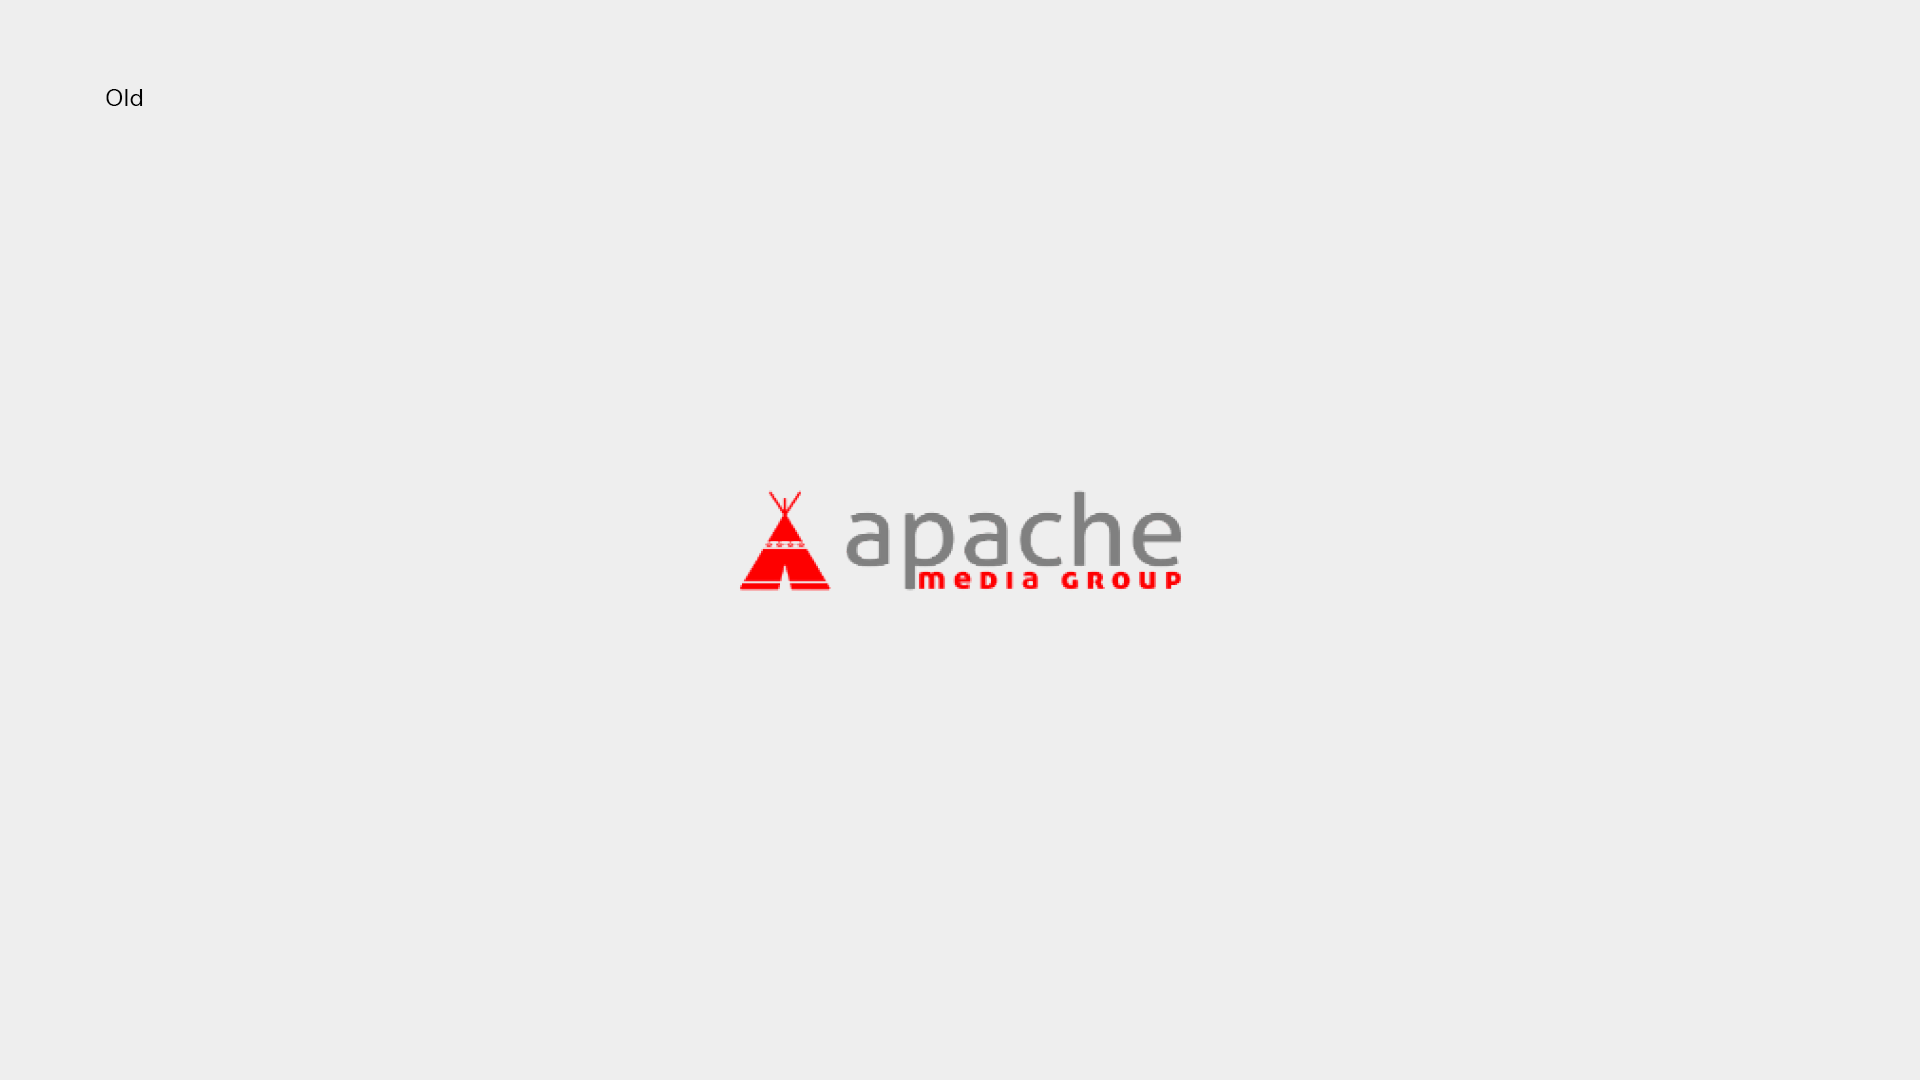 Apache logo old new